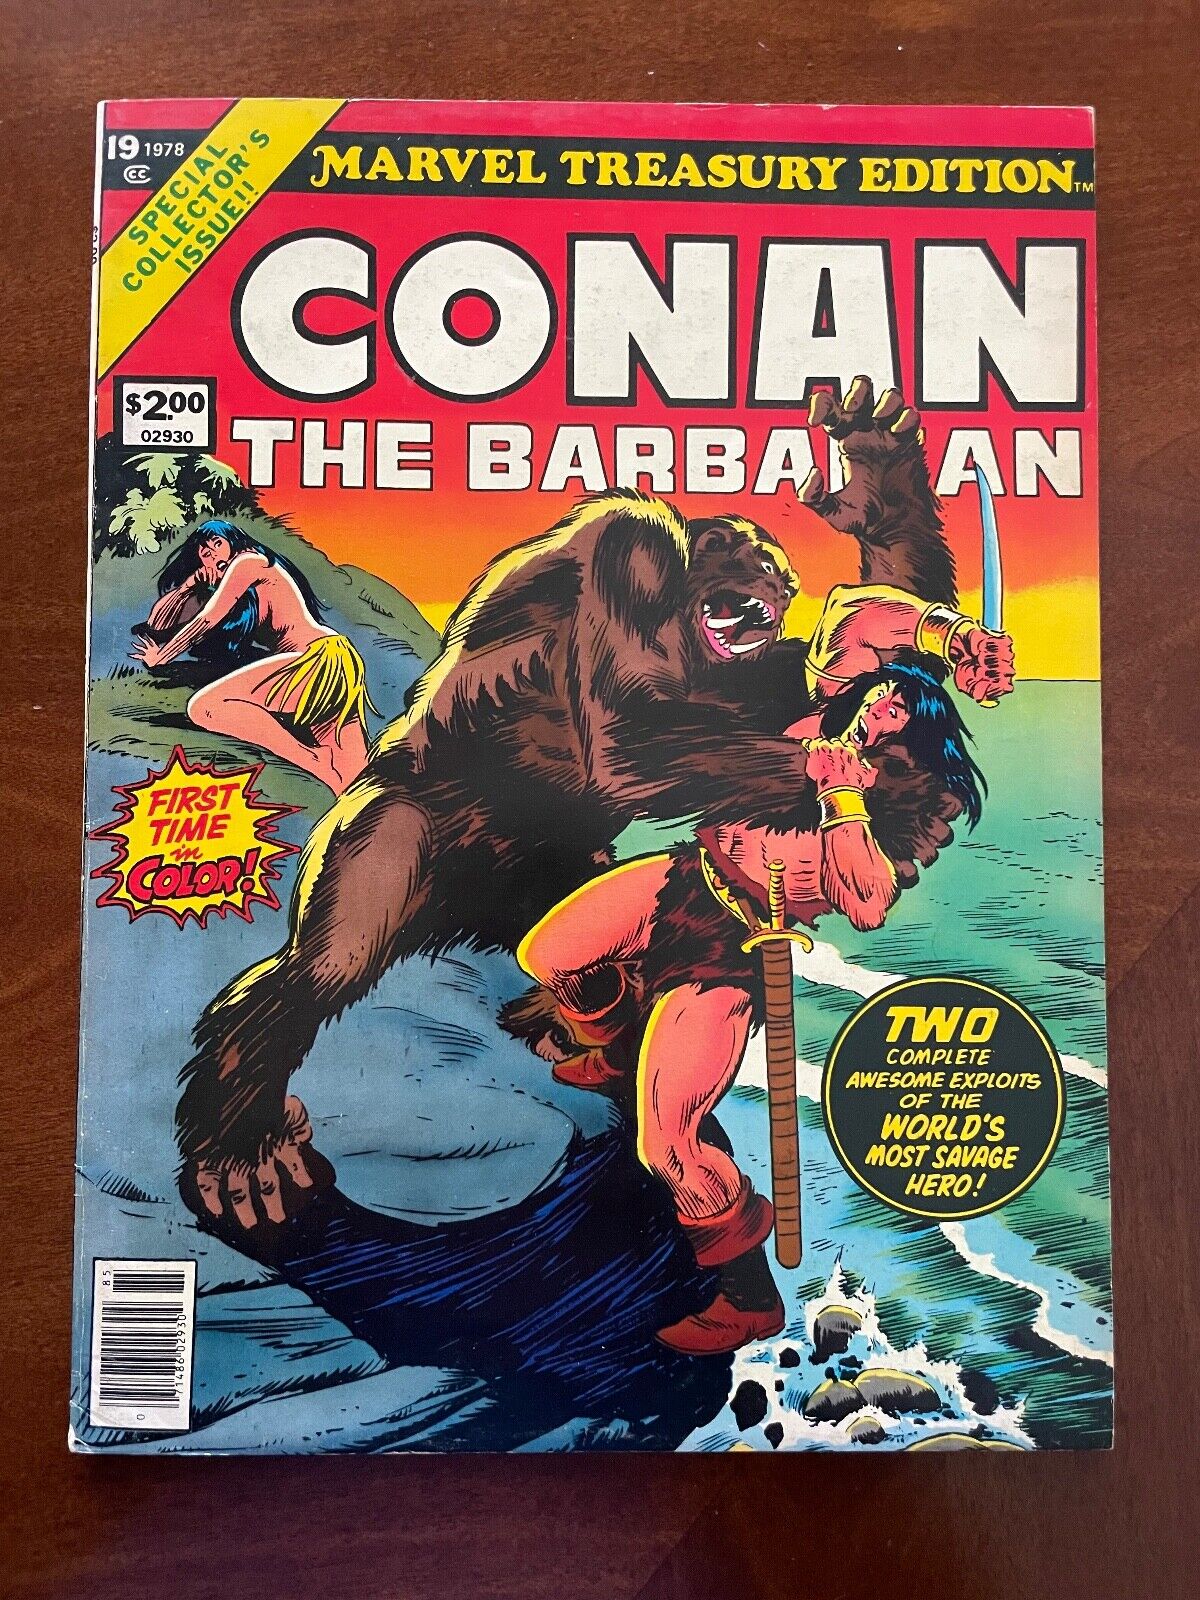 Marvel Treasury Edition #19, Marvel (1978), VF- (7.5) - Conan the Barbarian